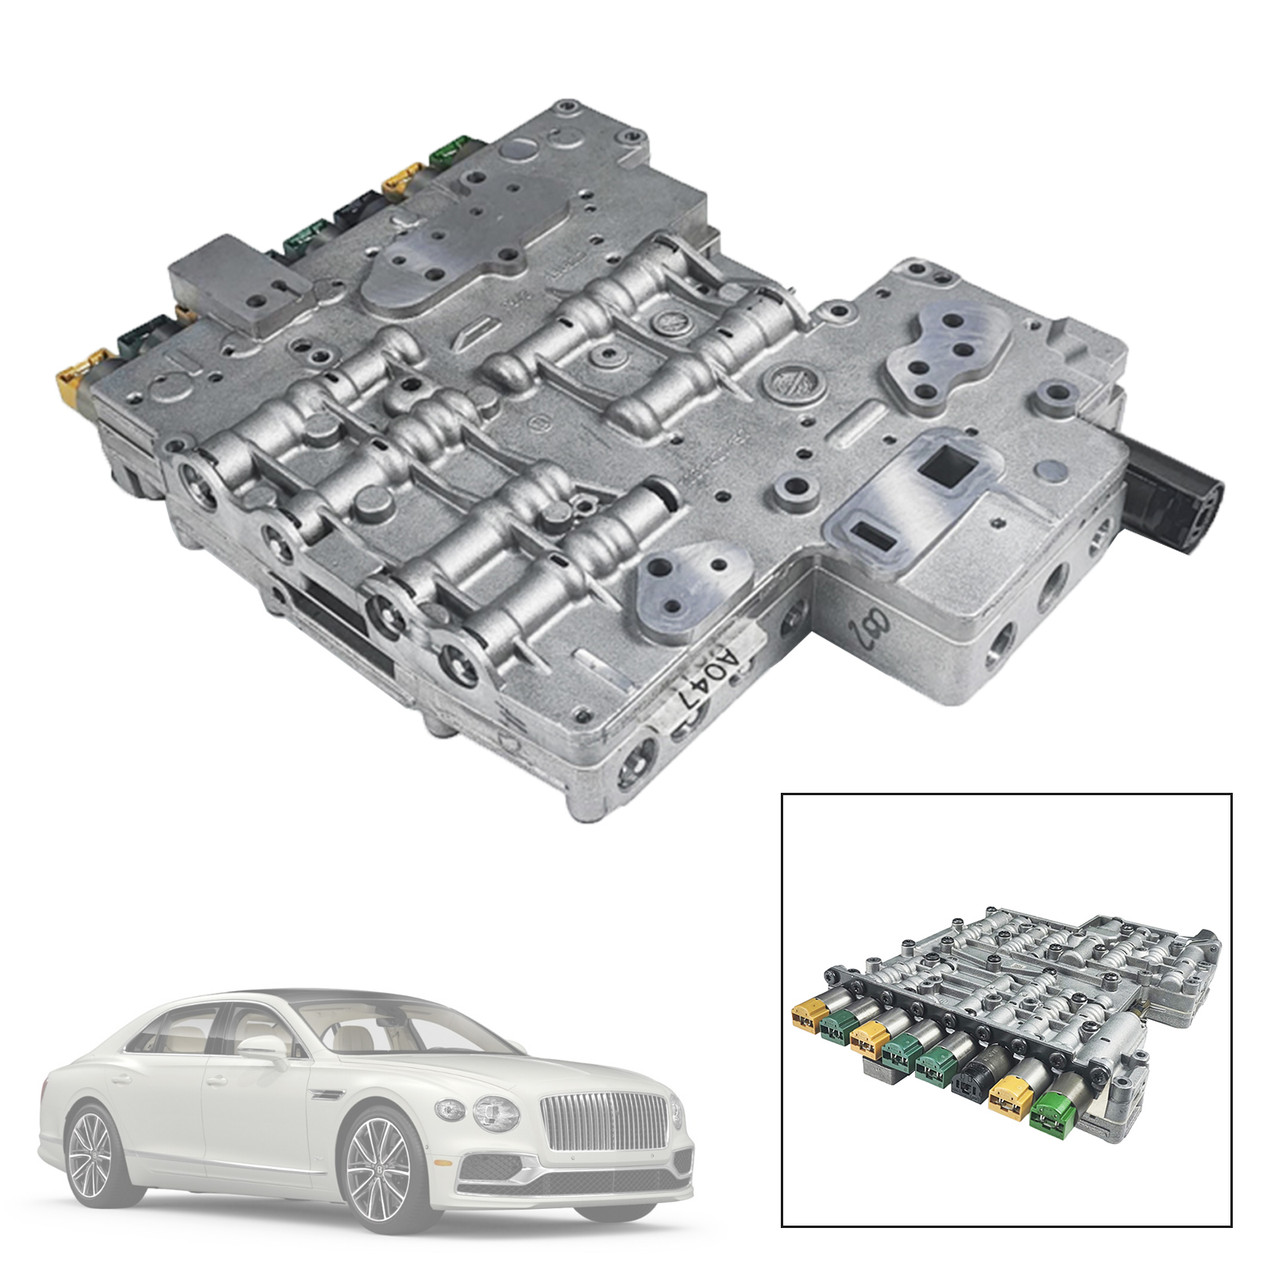 6HP26 Valve Body For Audi BMW VW Ford Kia LAND ROVER JAGUAR LINCOLN